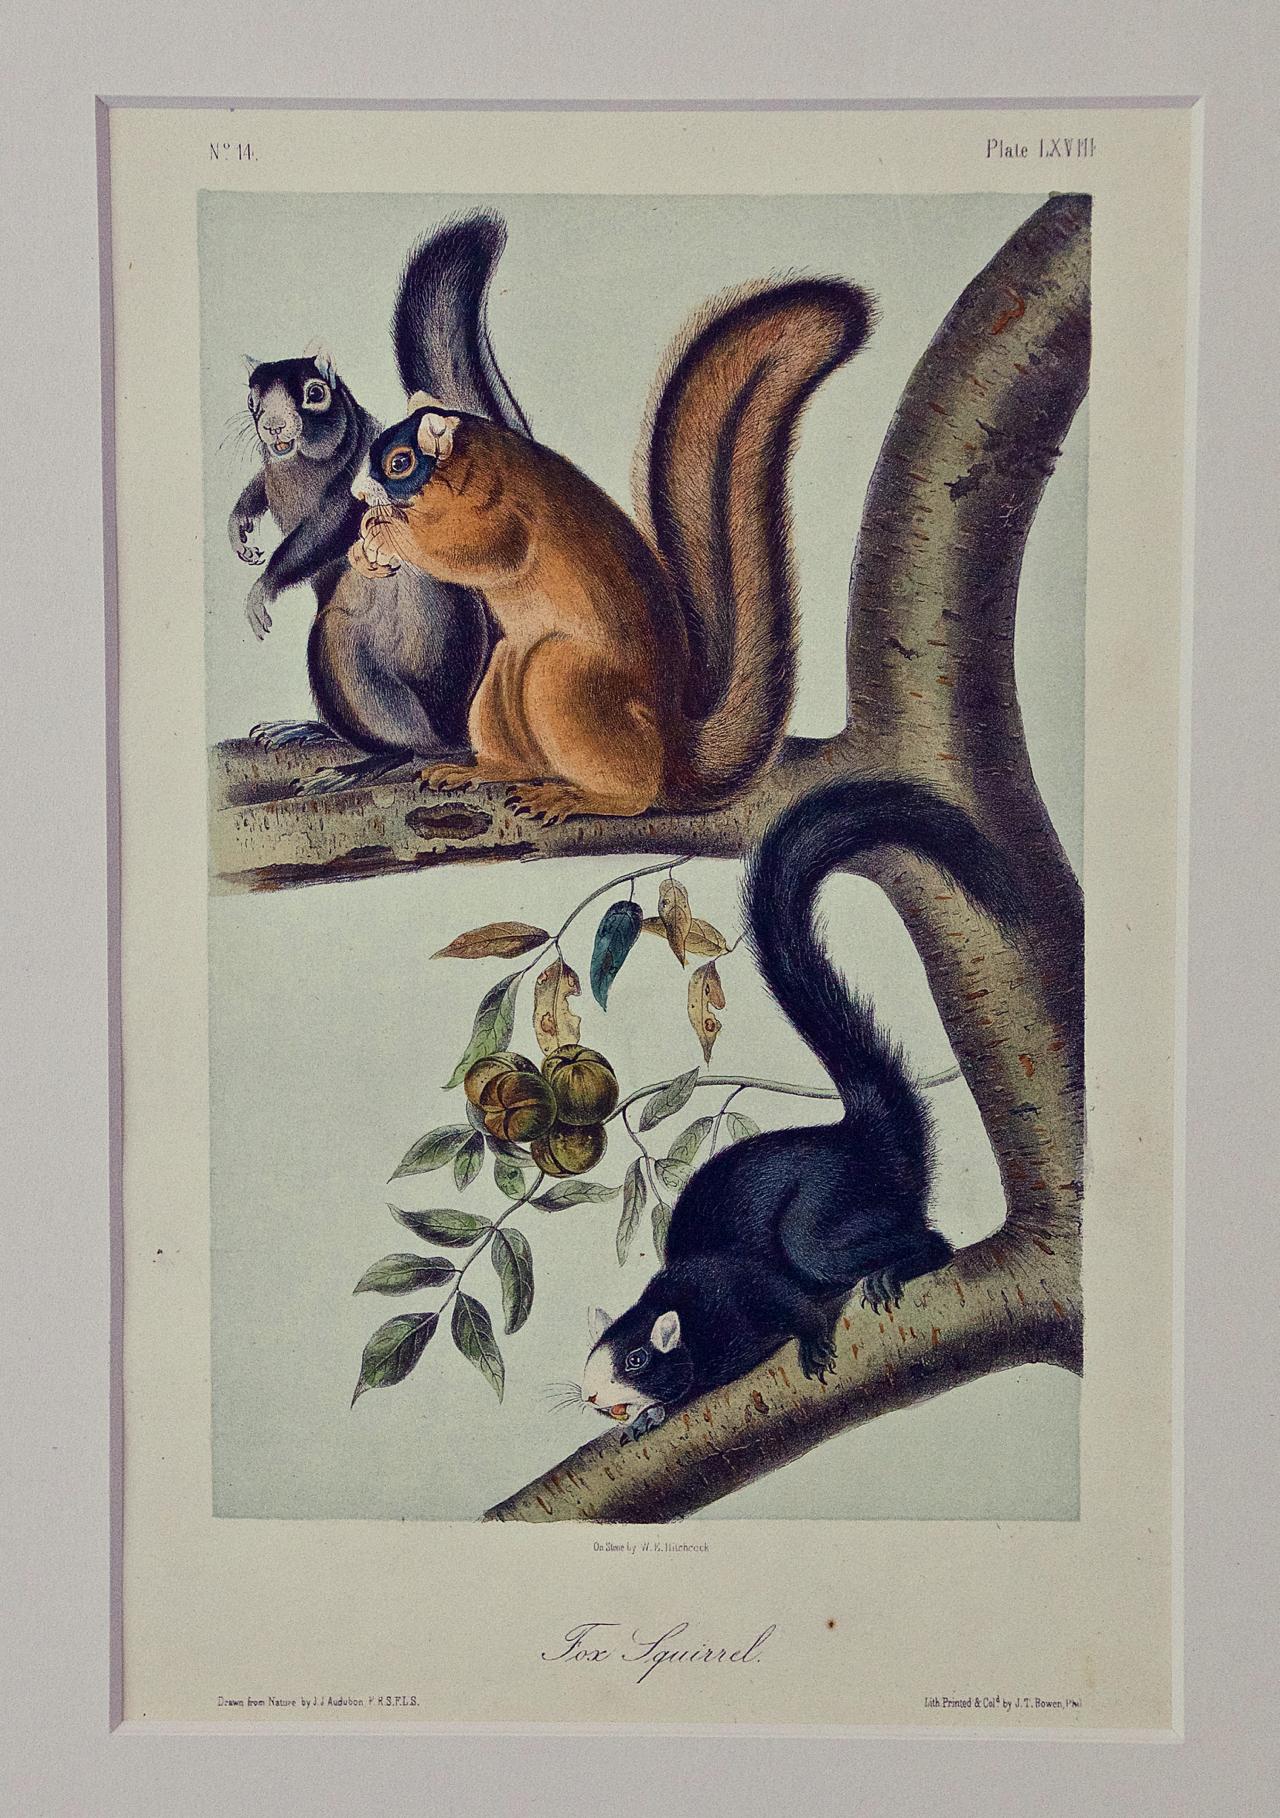 John James Audubon Landscape Print - Fox Squirrel: An Original 19th Century Audubon Hand-colored Lithograph